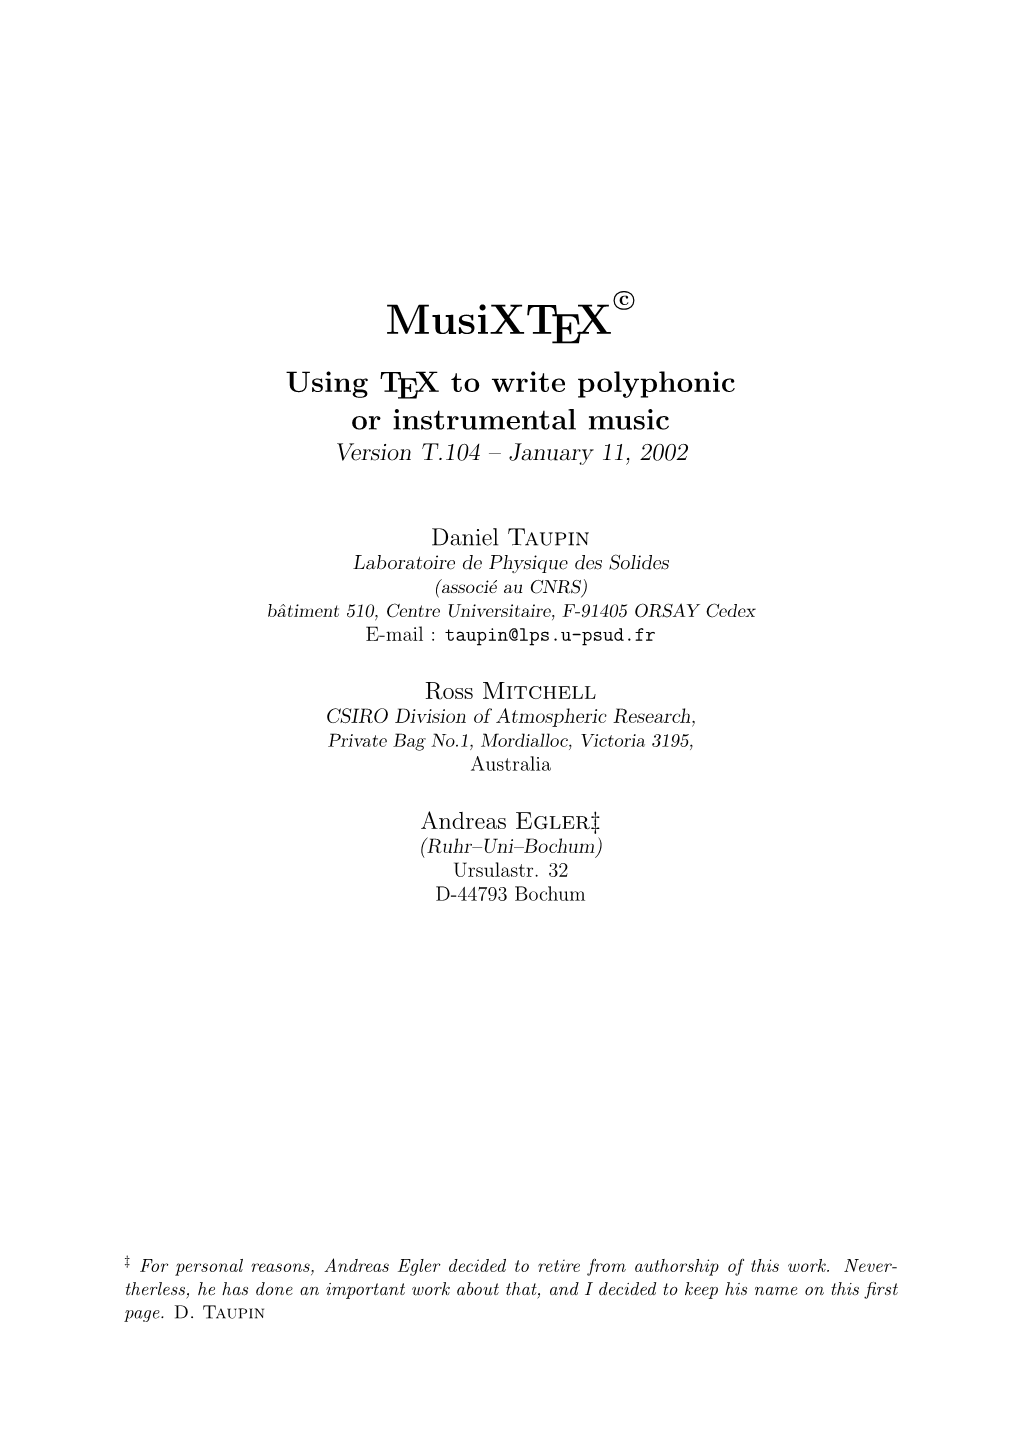 Musixtex Using TEX to Write Polyphonic Or Instrumental Music Version T.104 – January 11, 2002